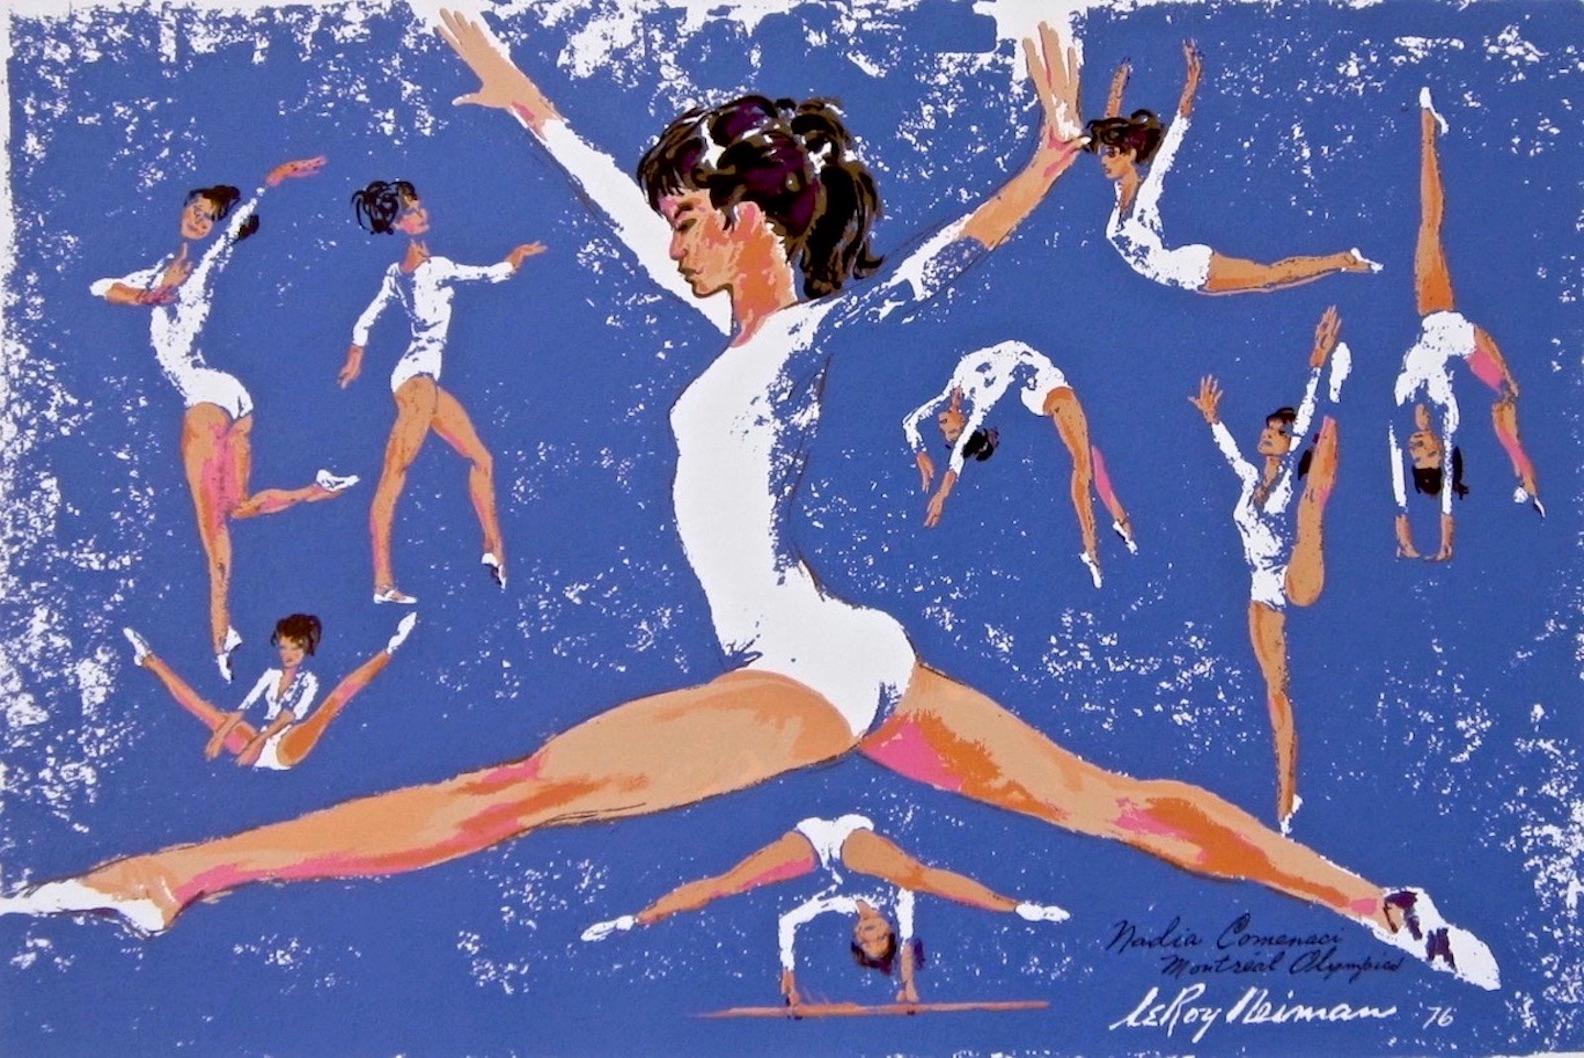 Nadia, Comaneci Montreal Olympics Poster, 1976